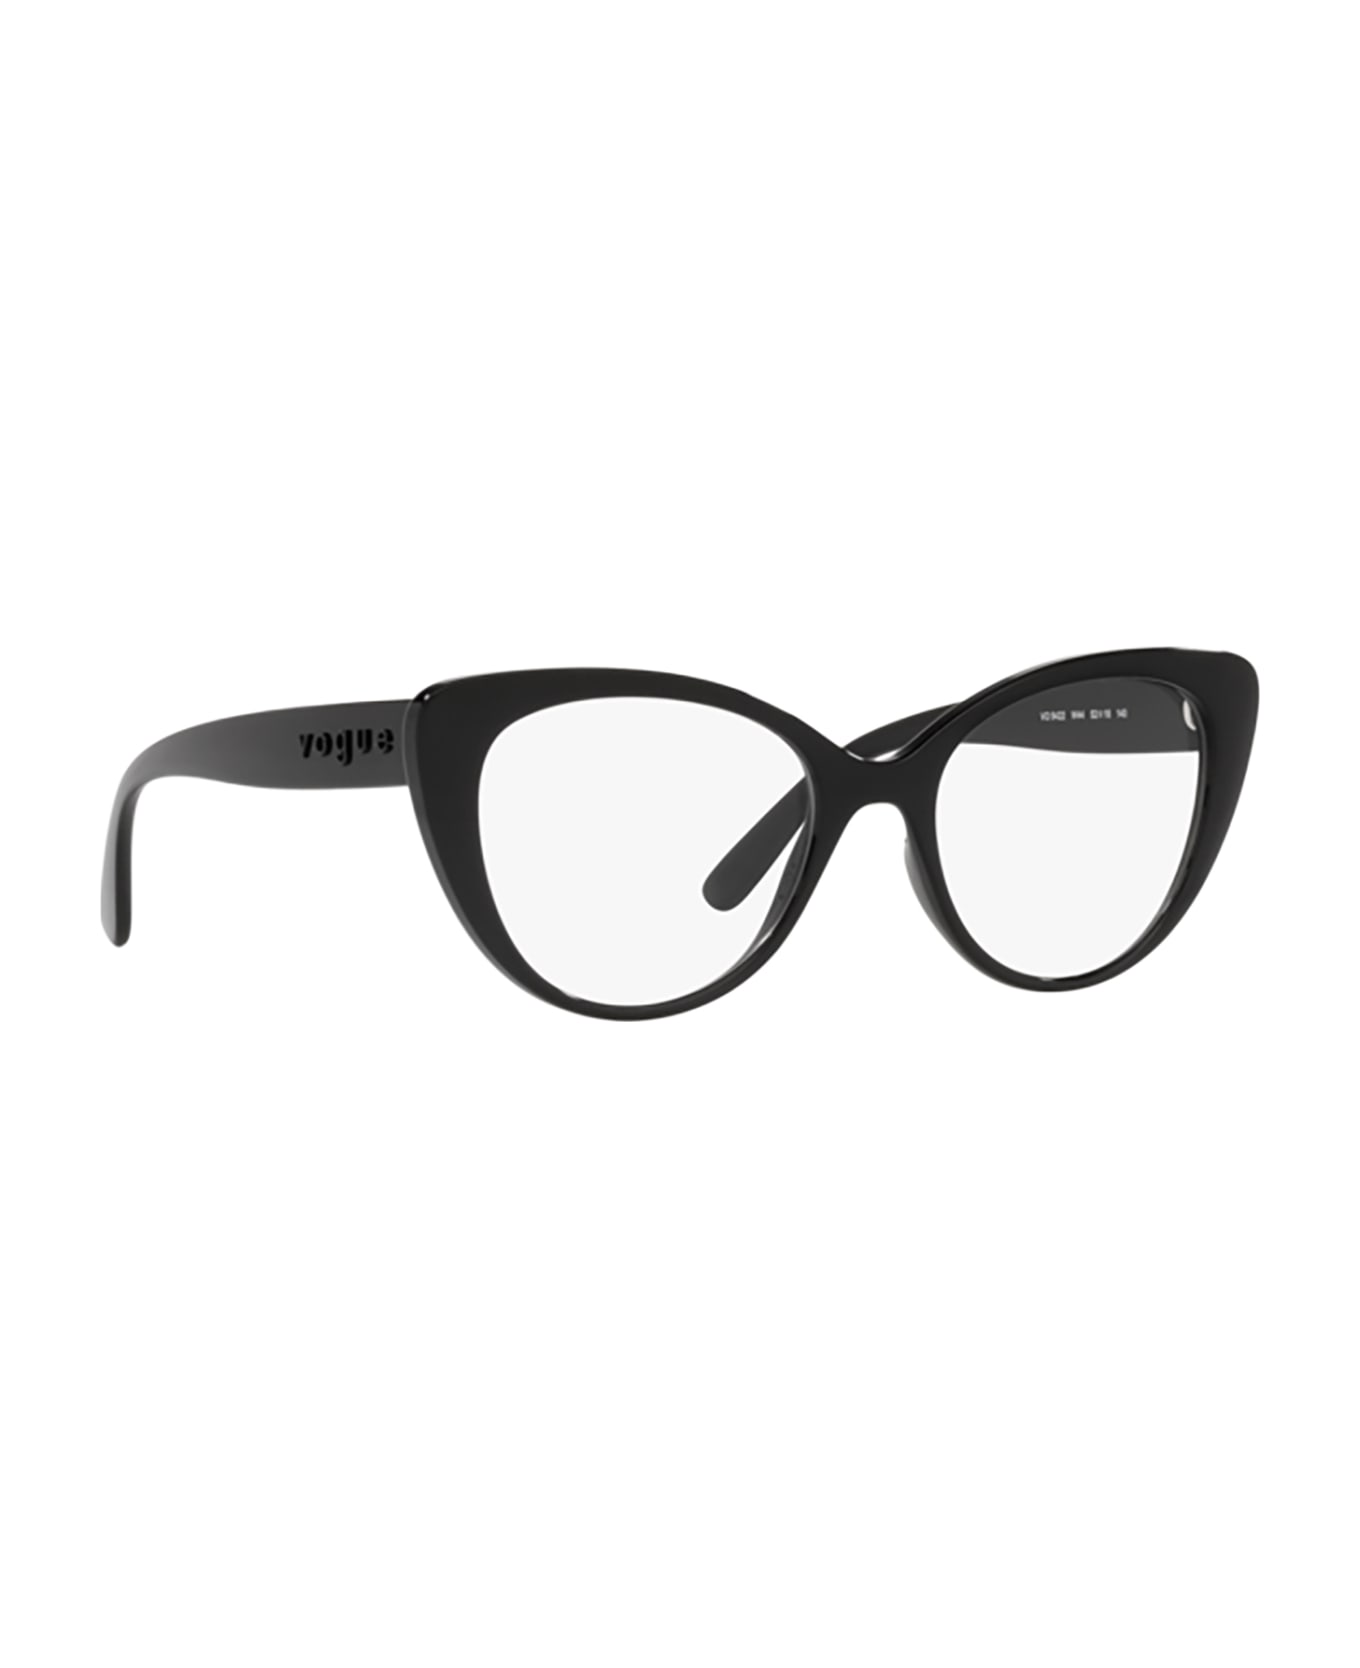 Vogue Eyewear Vo5422 Black Glasses - Black